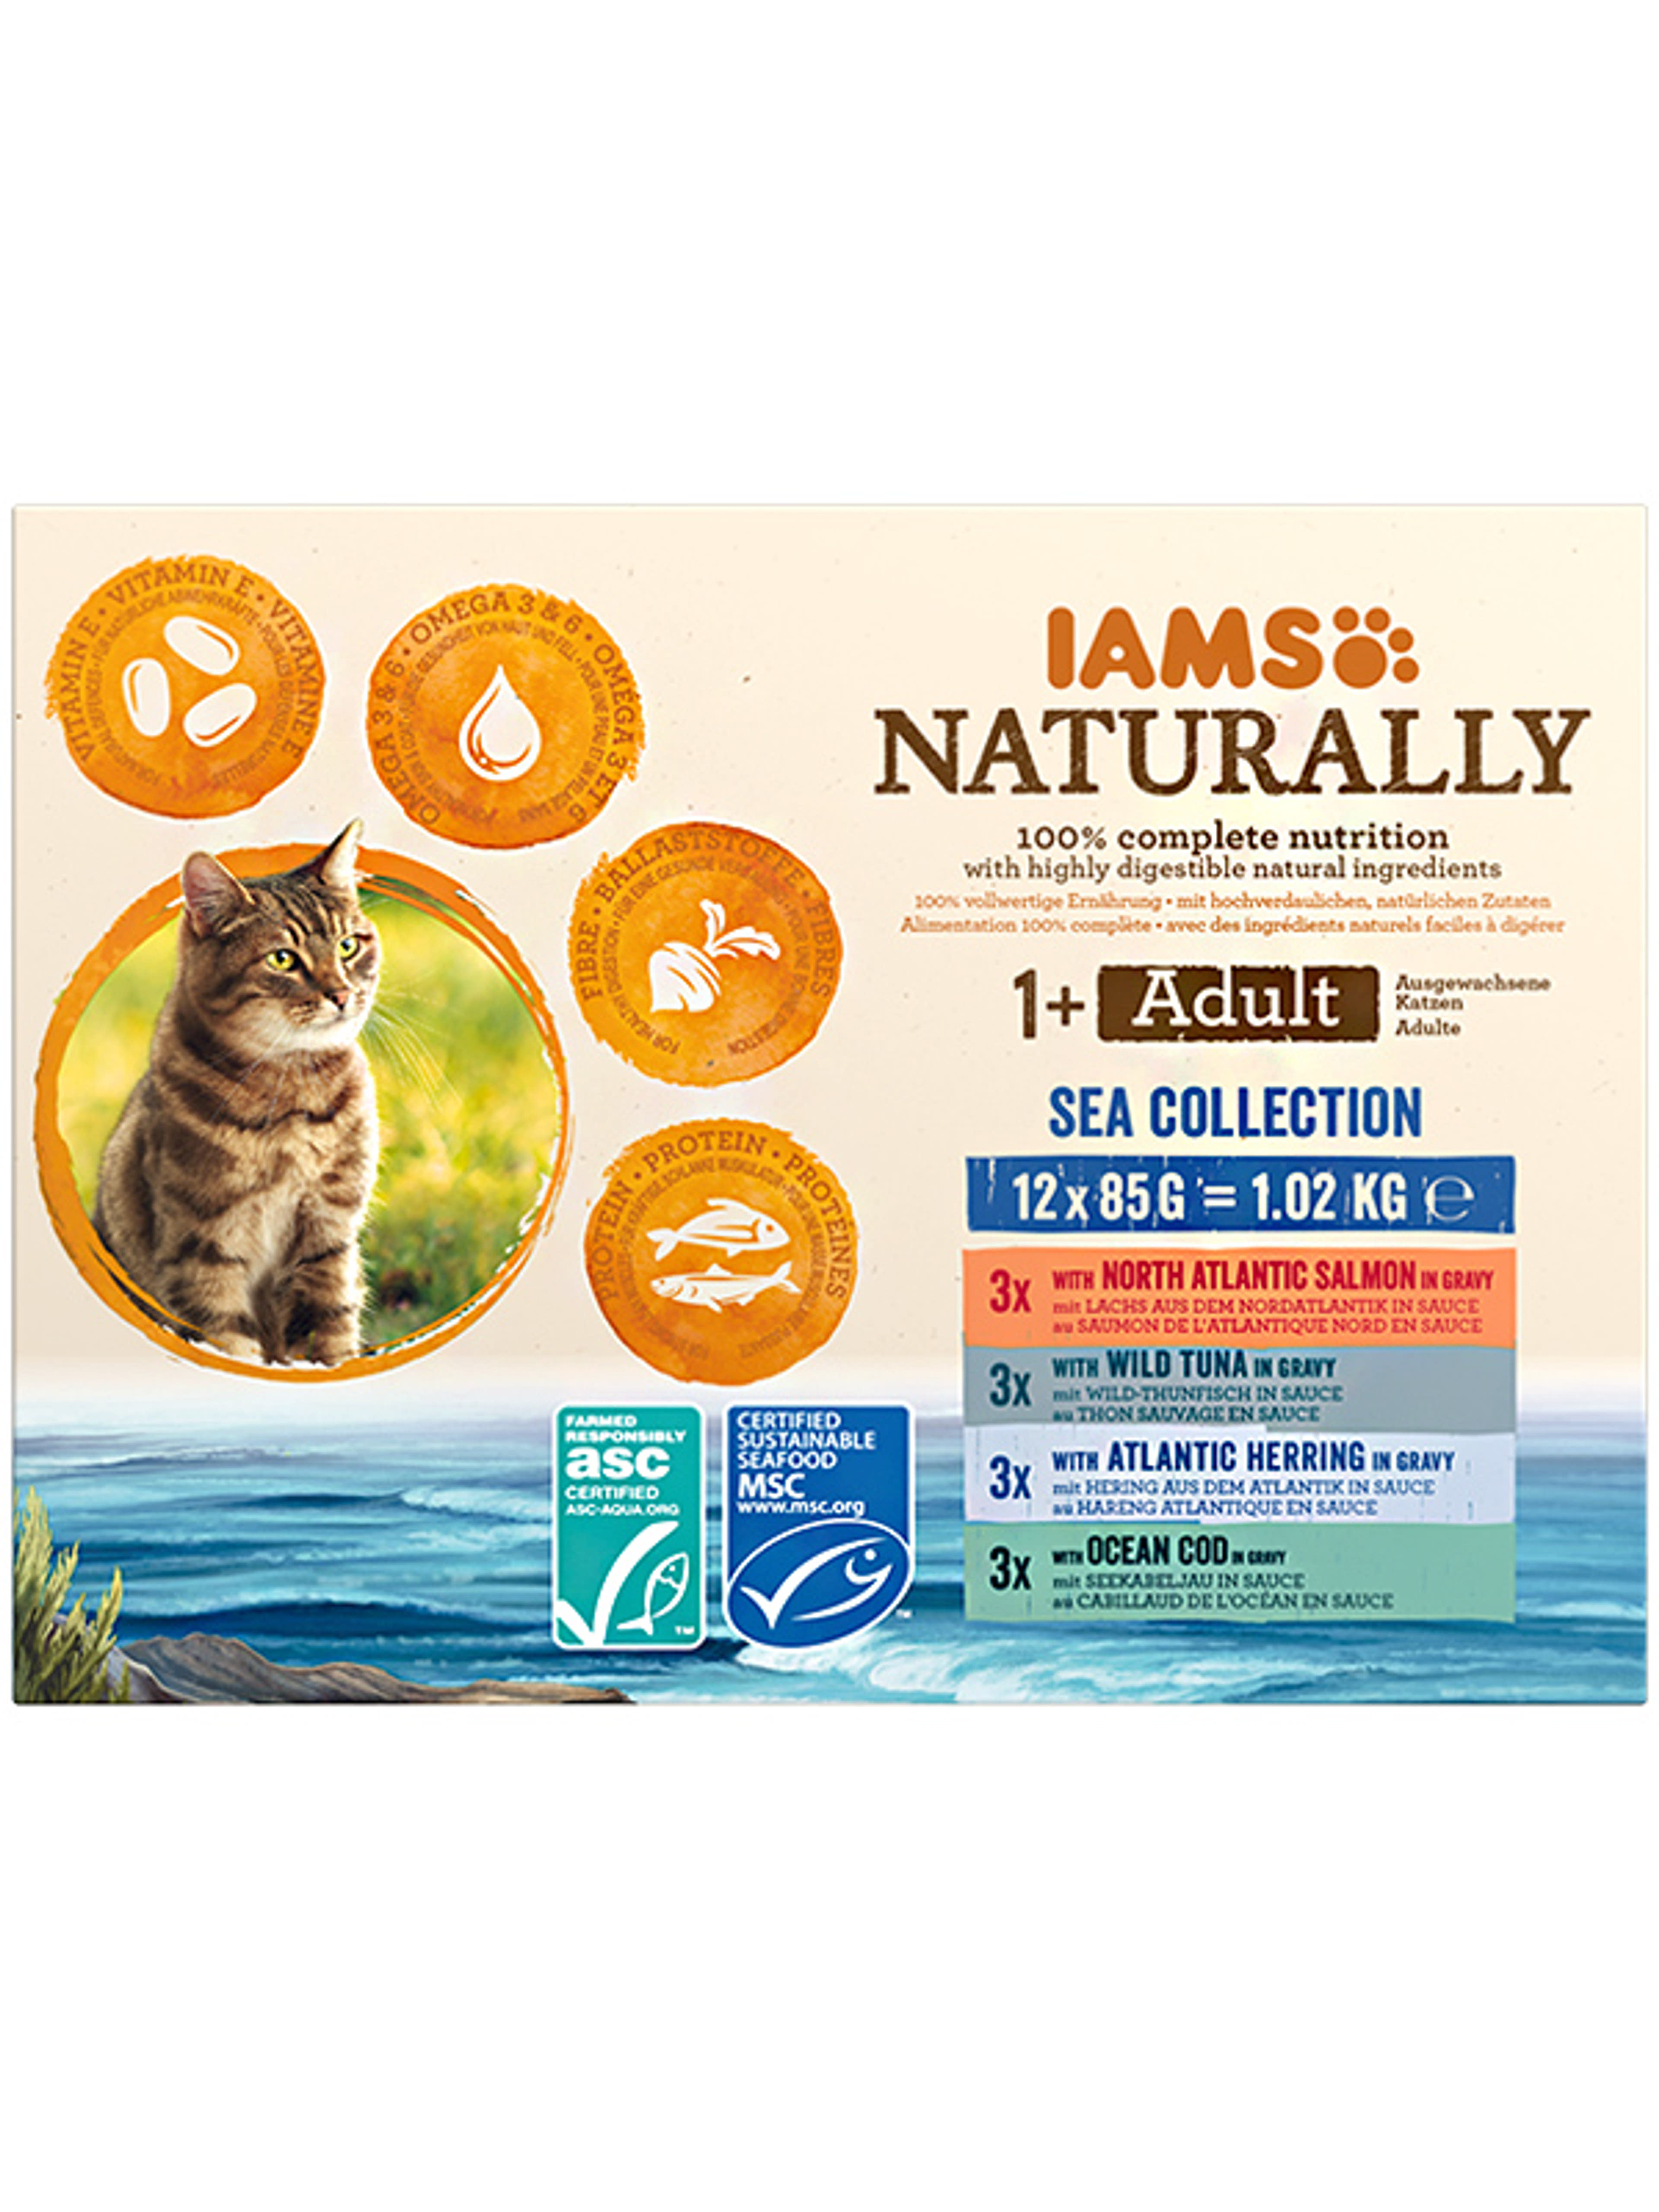 IAMS Naturally alutasak macskáknak, tengeri hal 12x85g - 1020 g